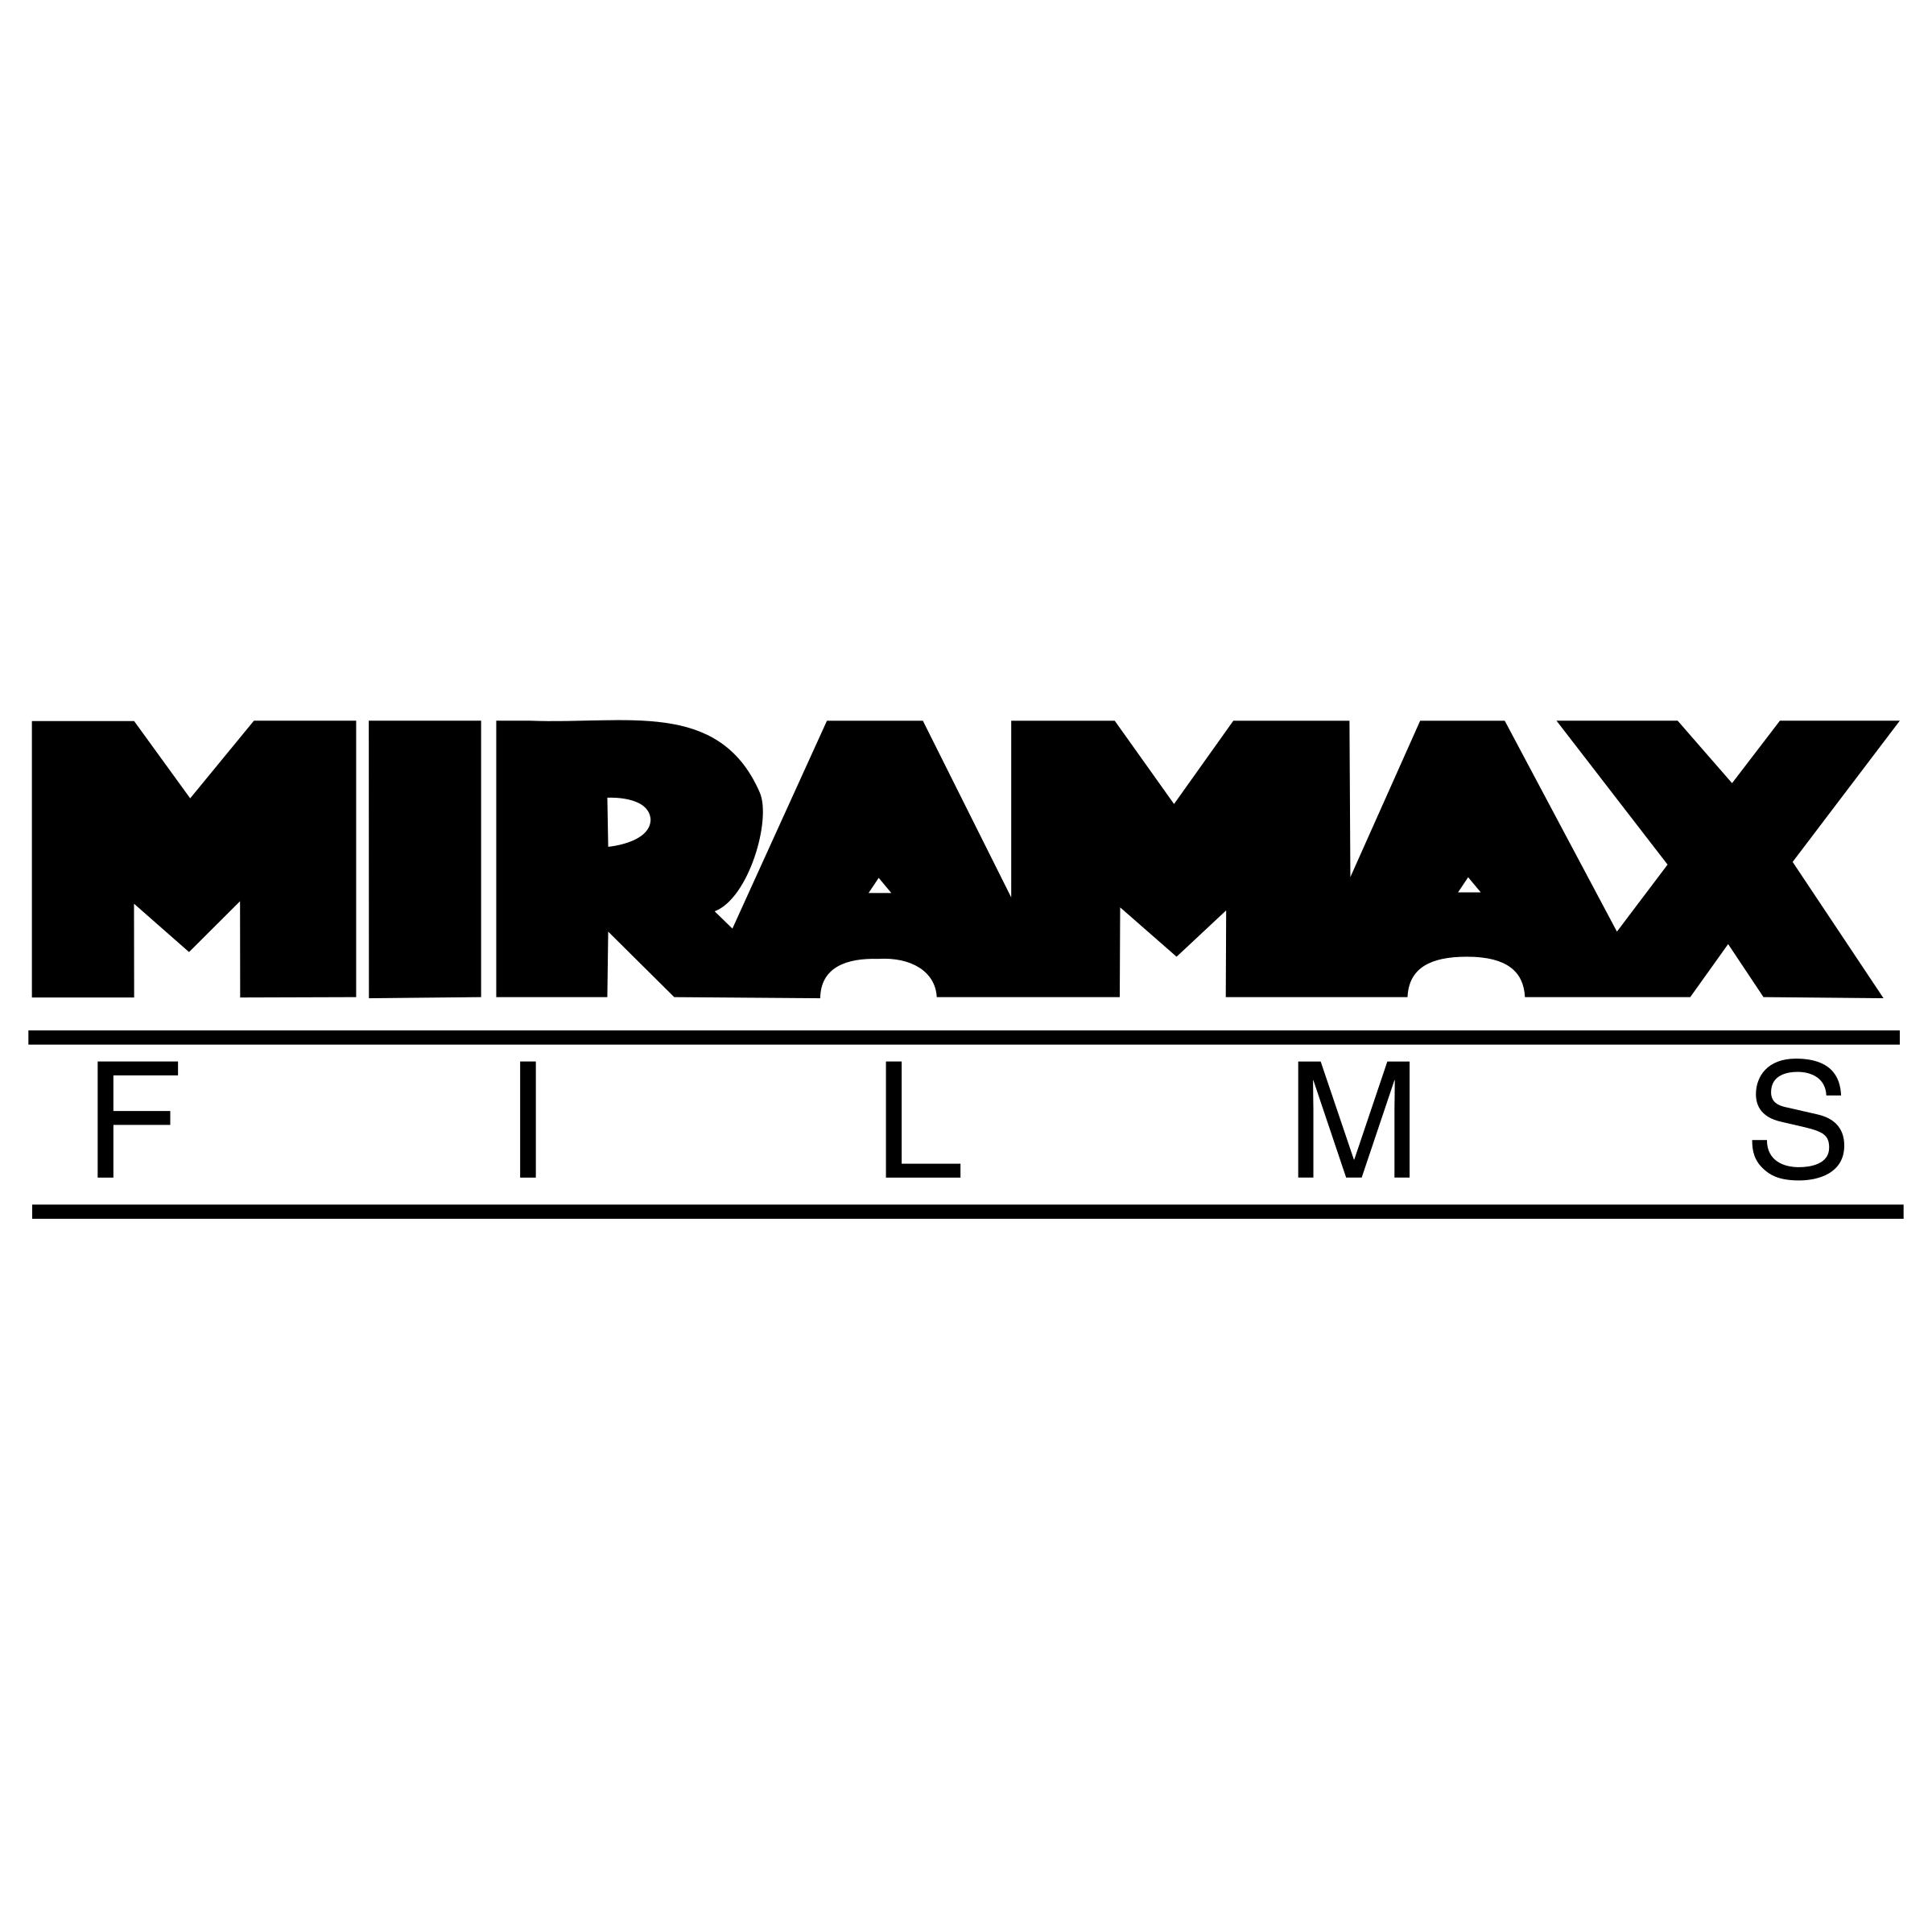 Miramax Films Logo - Miramax Films Logo PNG Transparent & SVG Vector - Freebie Supply